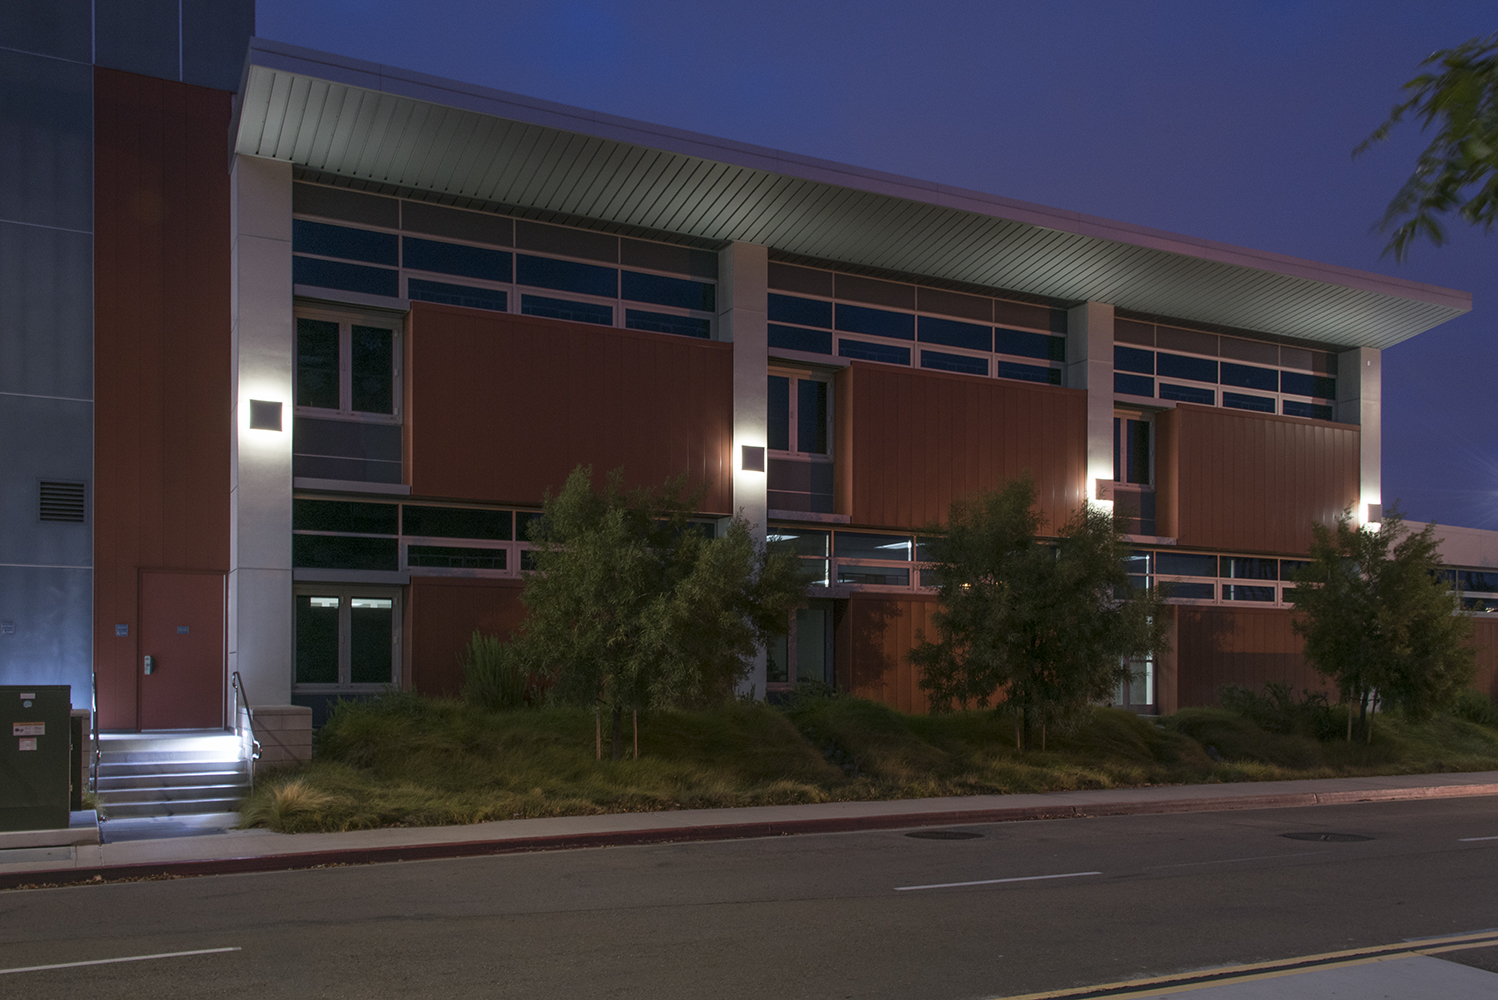 Southridge exterior lighting illuminating a campus building at night.